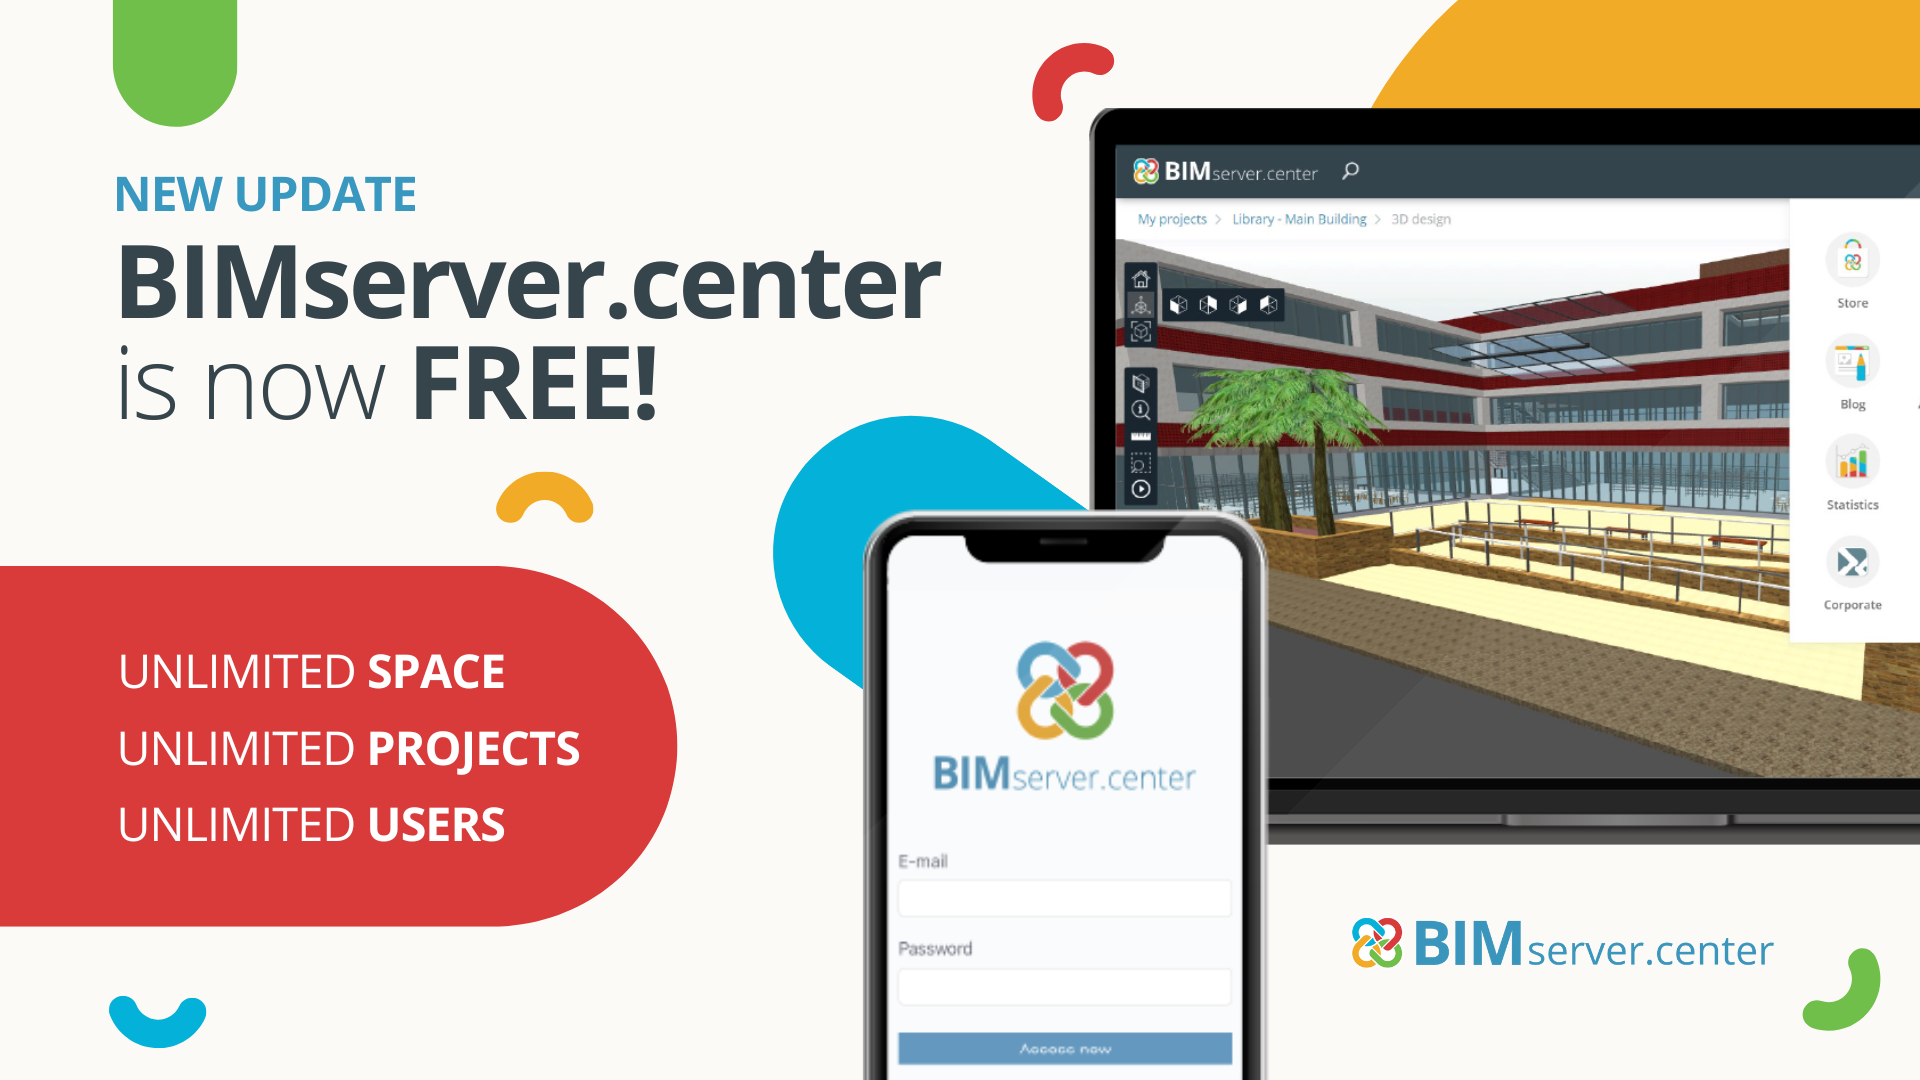 BIMserver.center is now FREE!